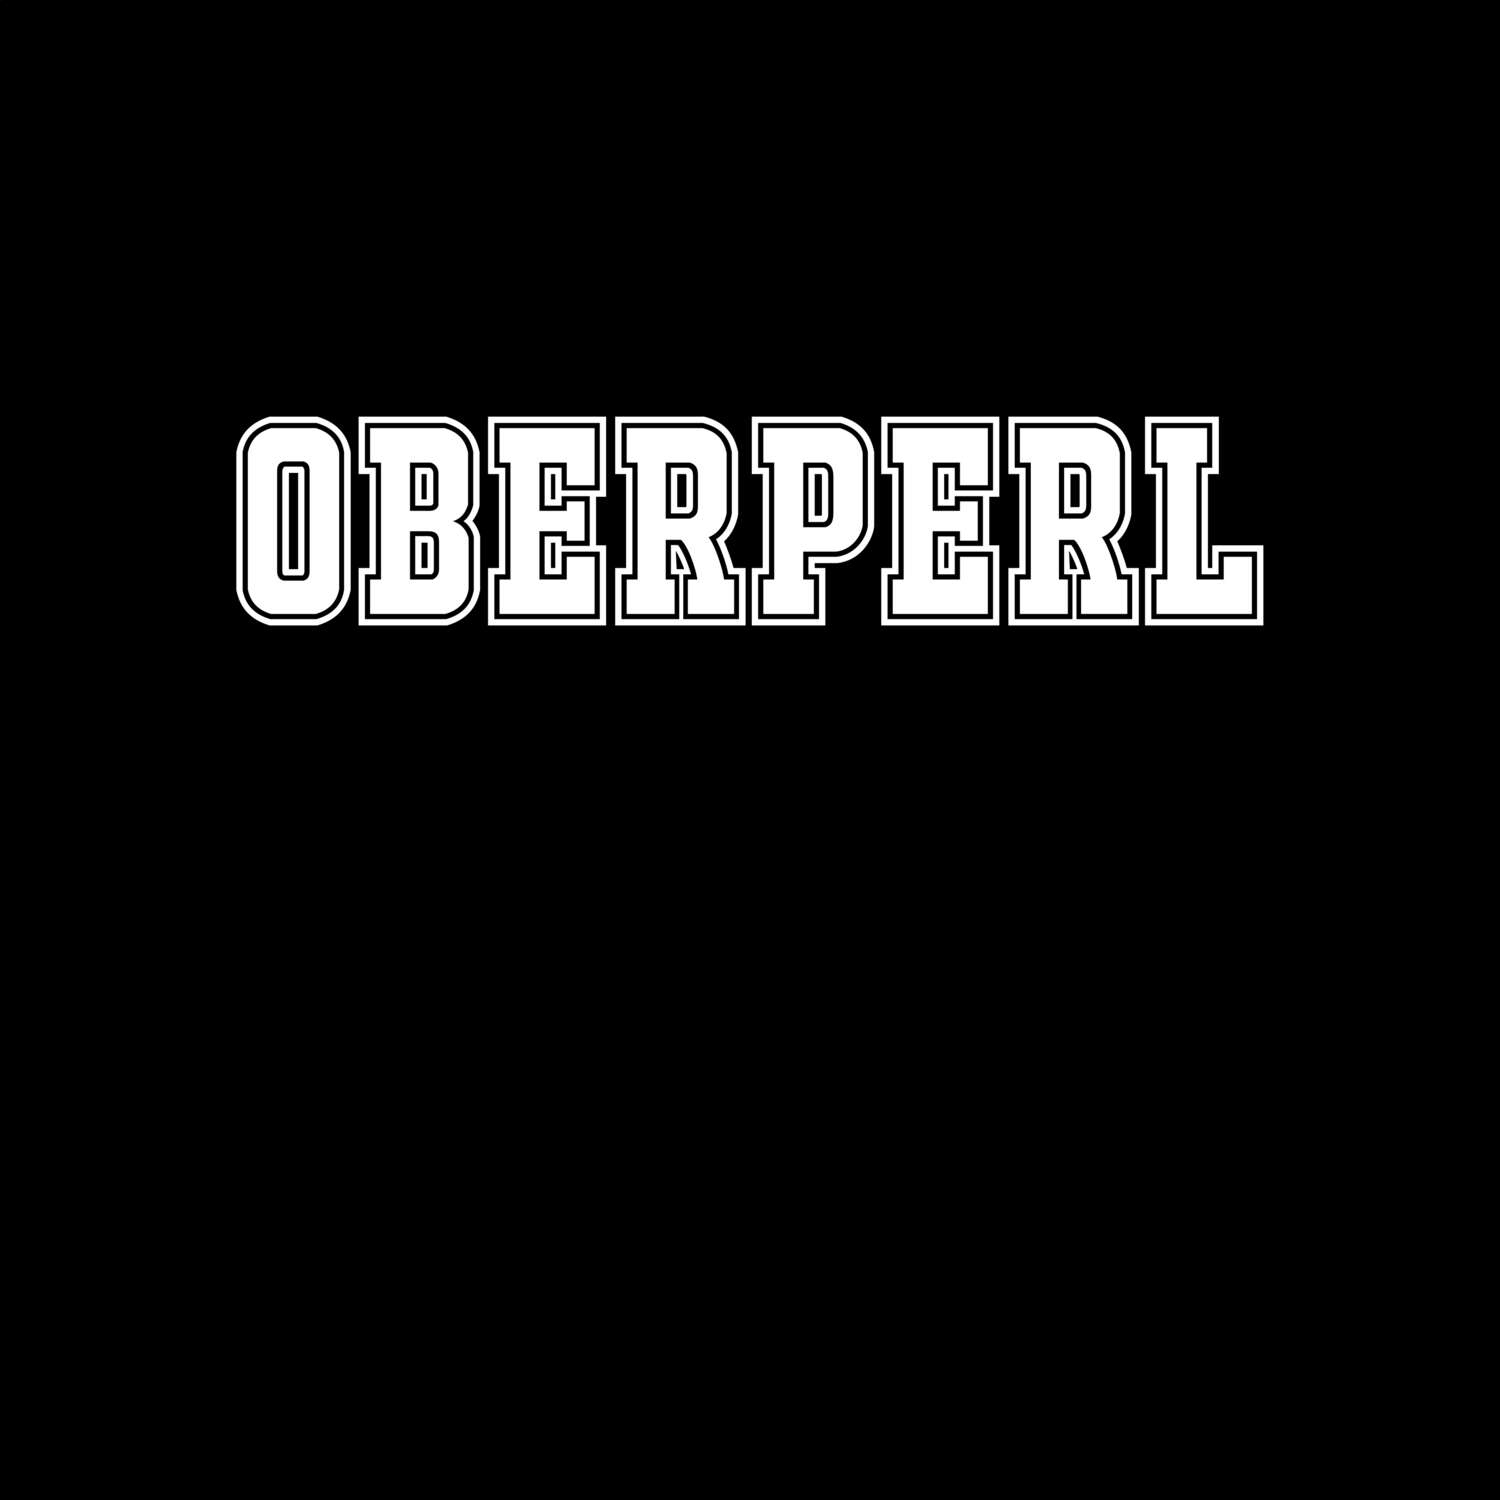 Oberperl T-Shirt »Classic«